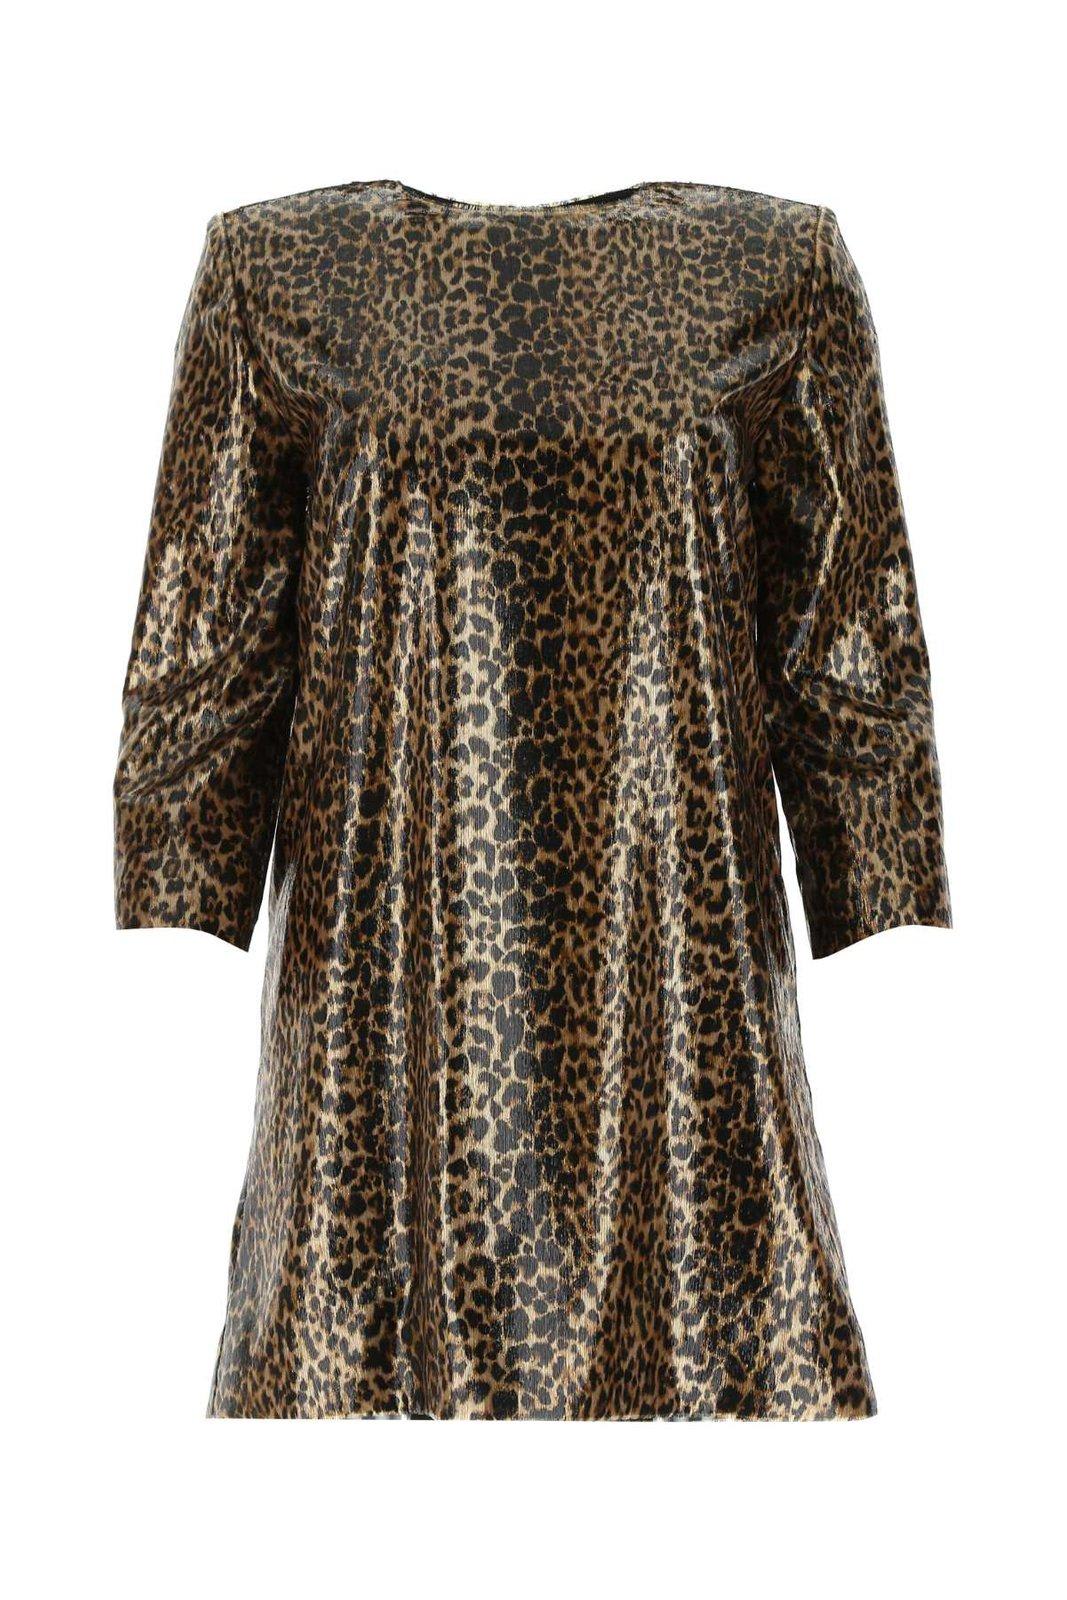 Saint Laurent Leopard Print Mini Dress